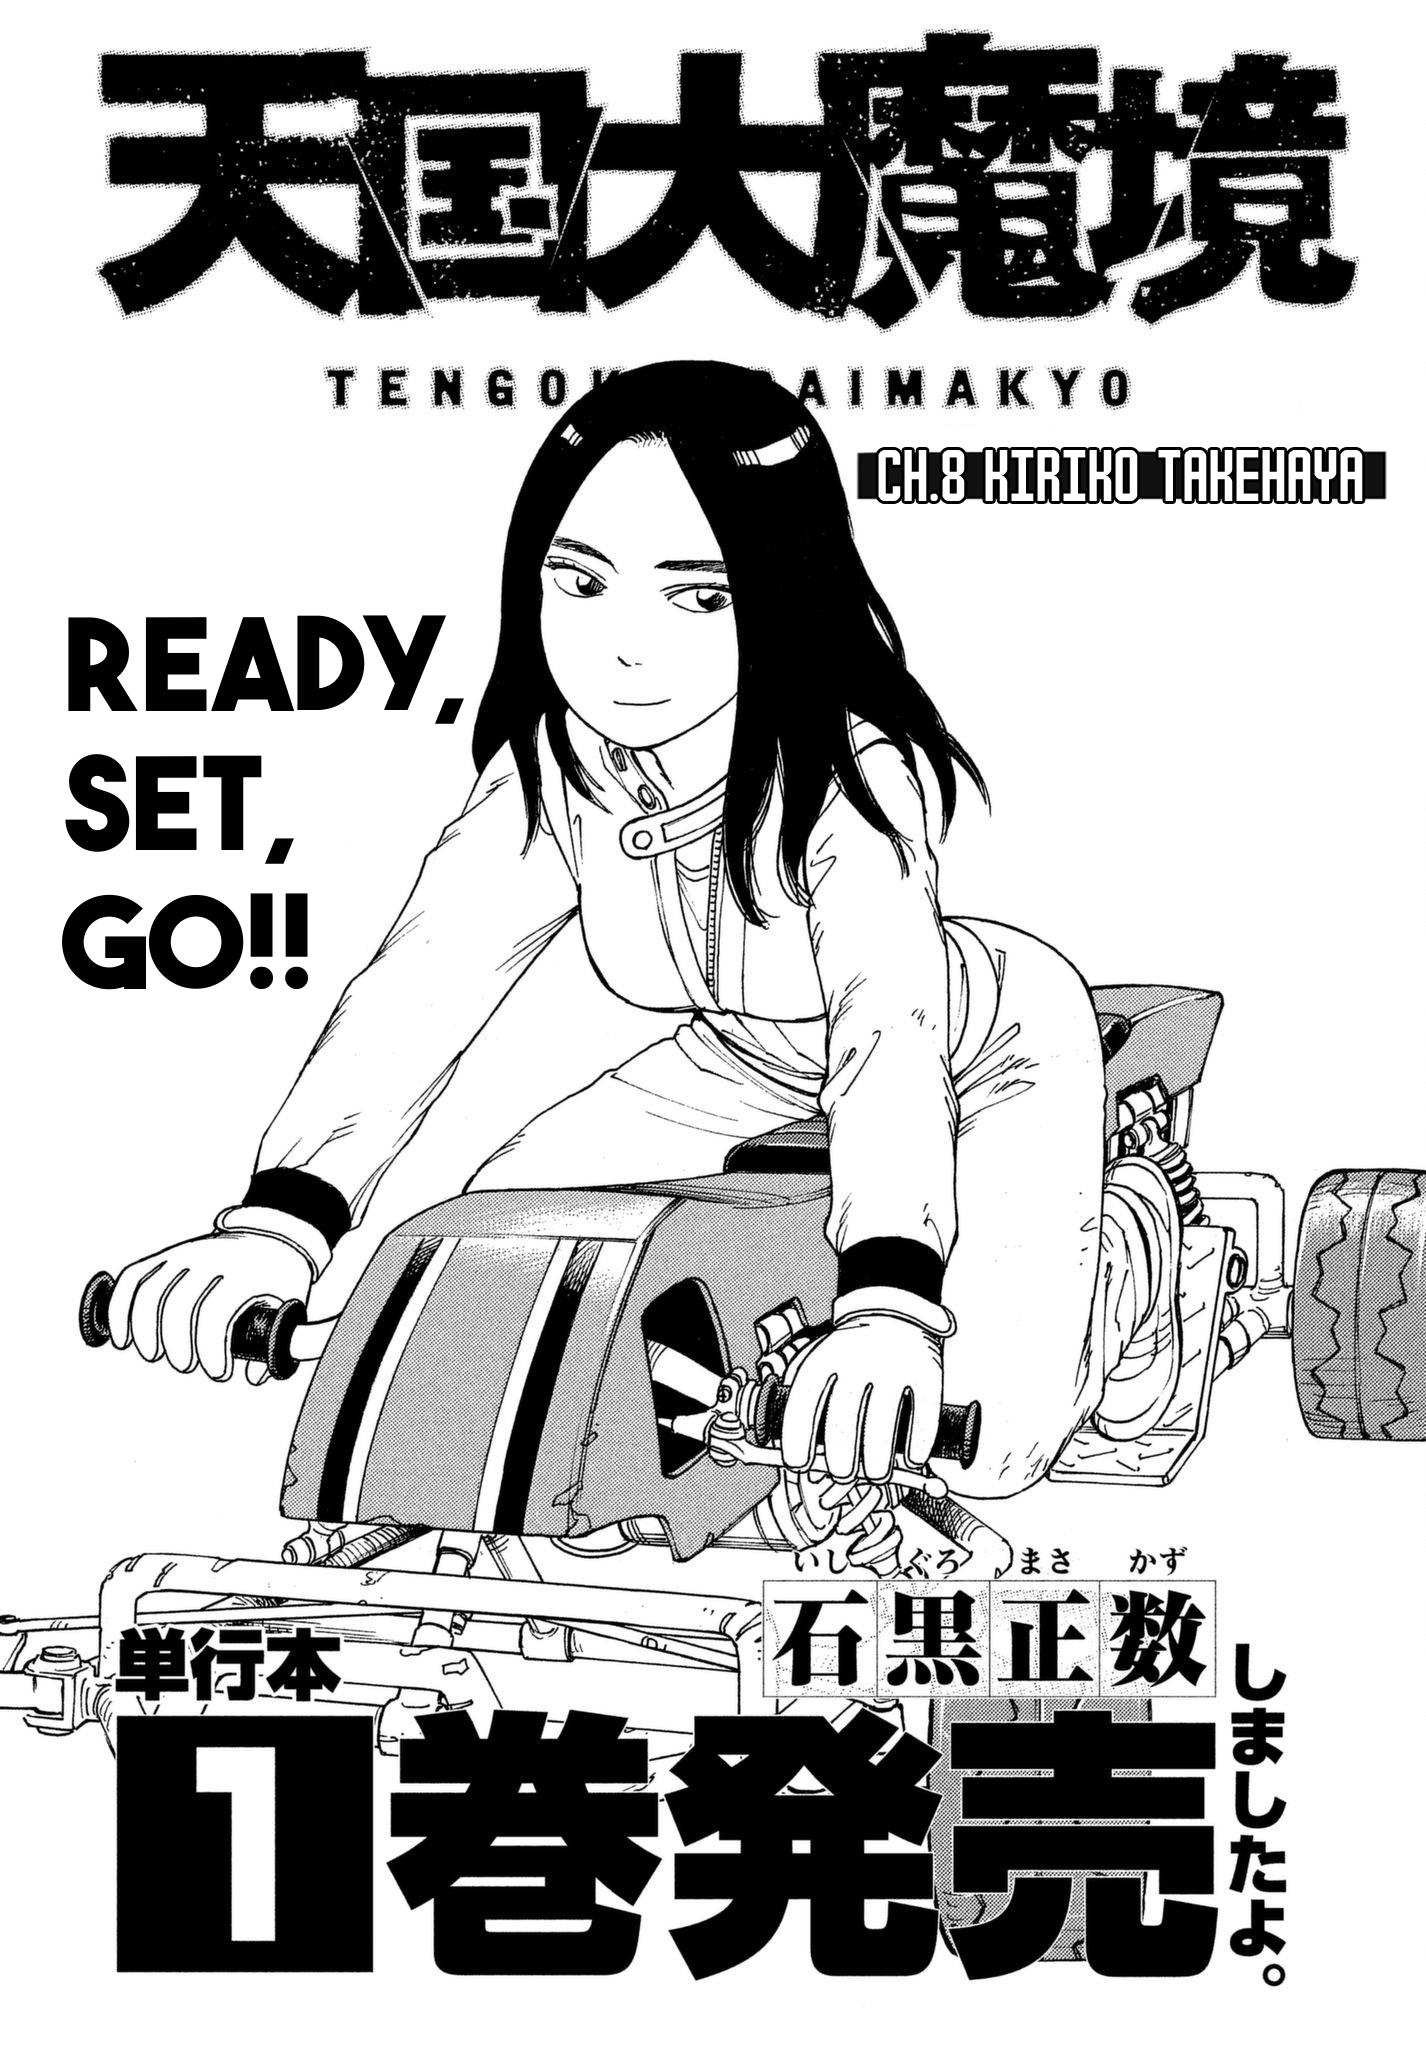 Tengoku Daimakyou 51, Tengoku Daimakyou 51 Page 1 - Read Free Manga Online  at Ten Manga